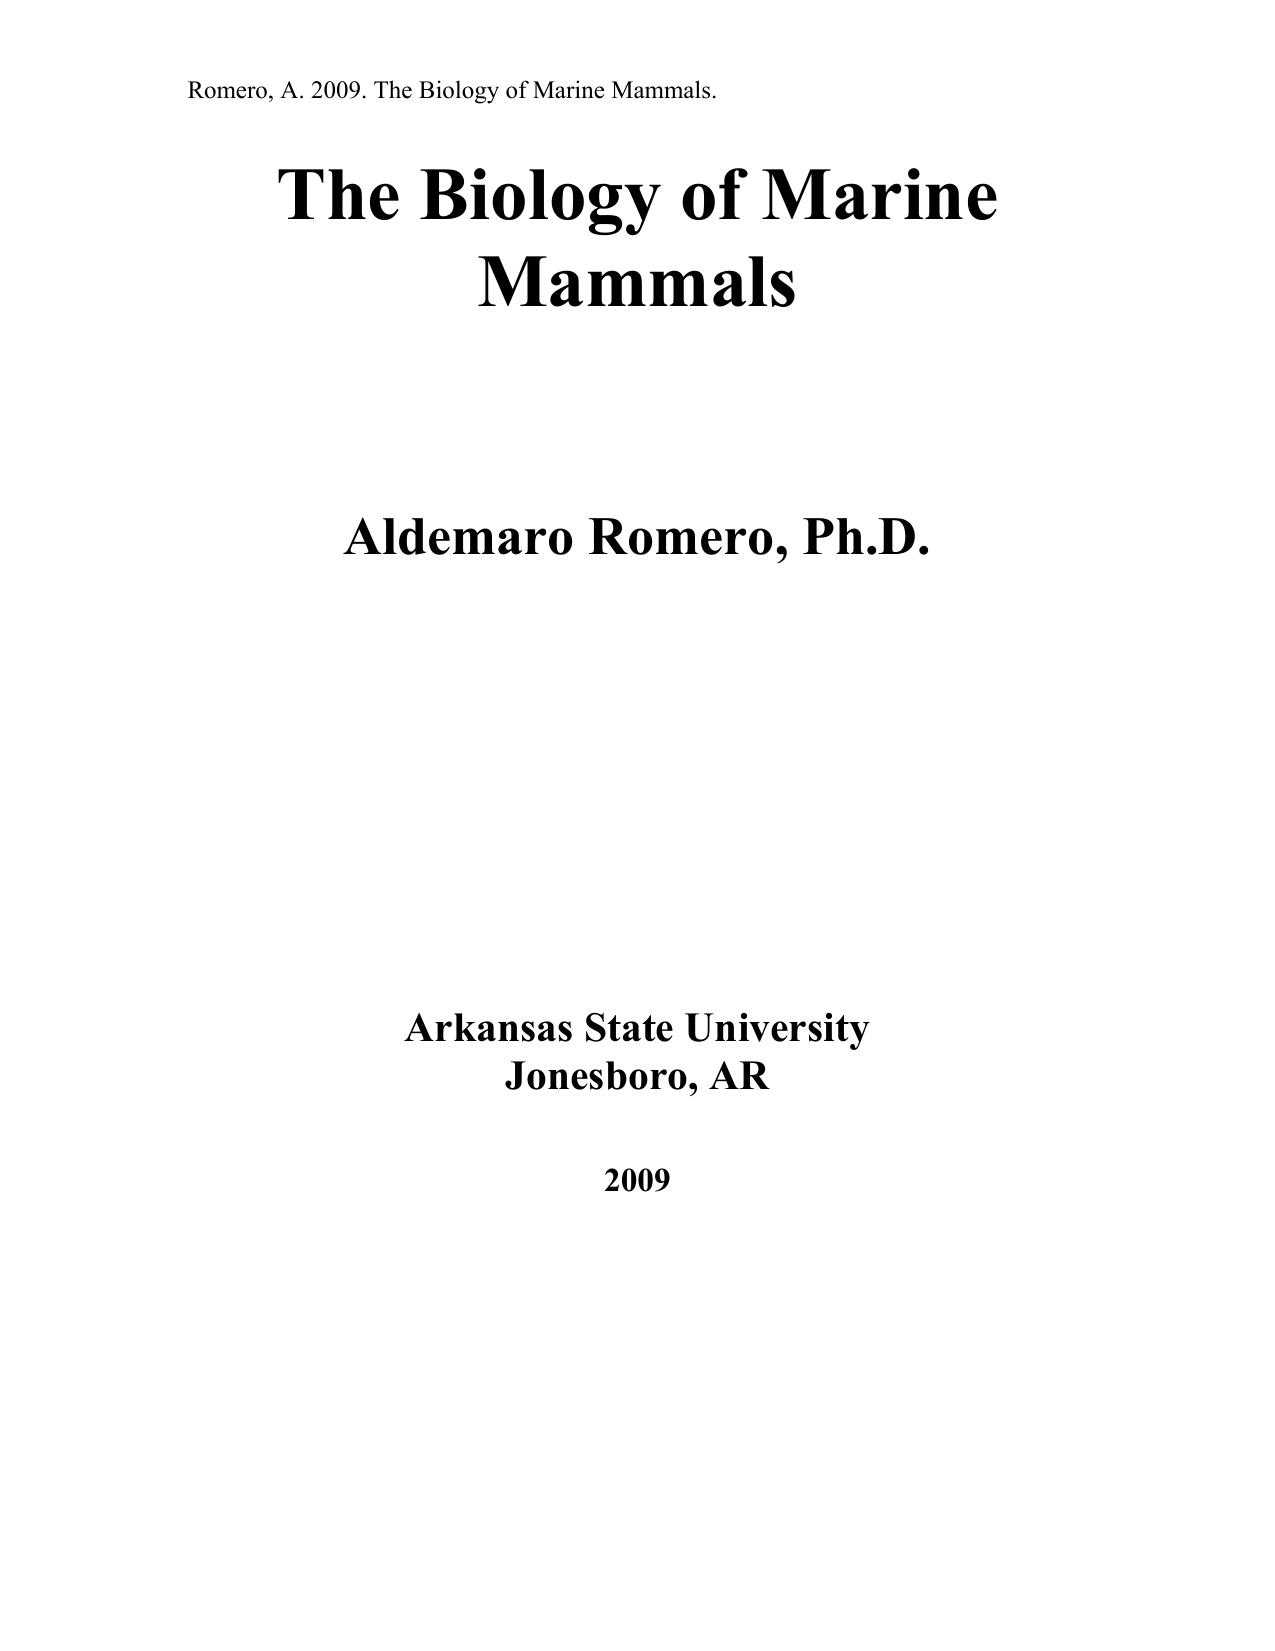 Microsoft Word - Romero, A. 2009. The Biology of Marine Mammals